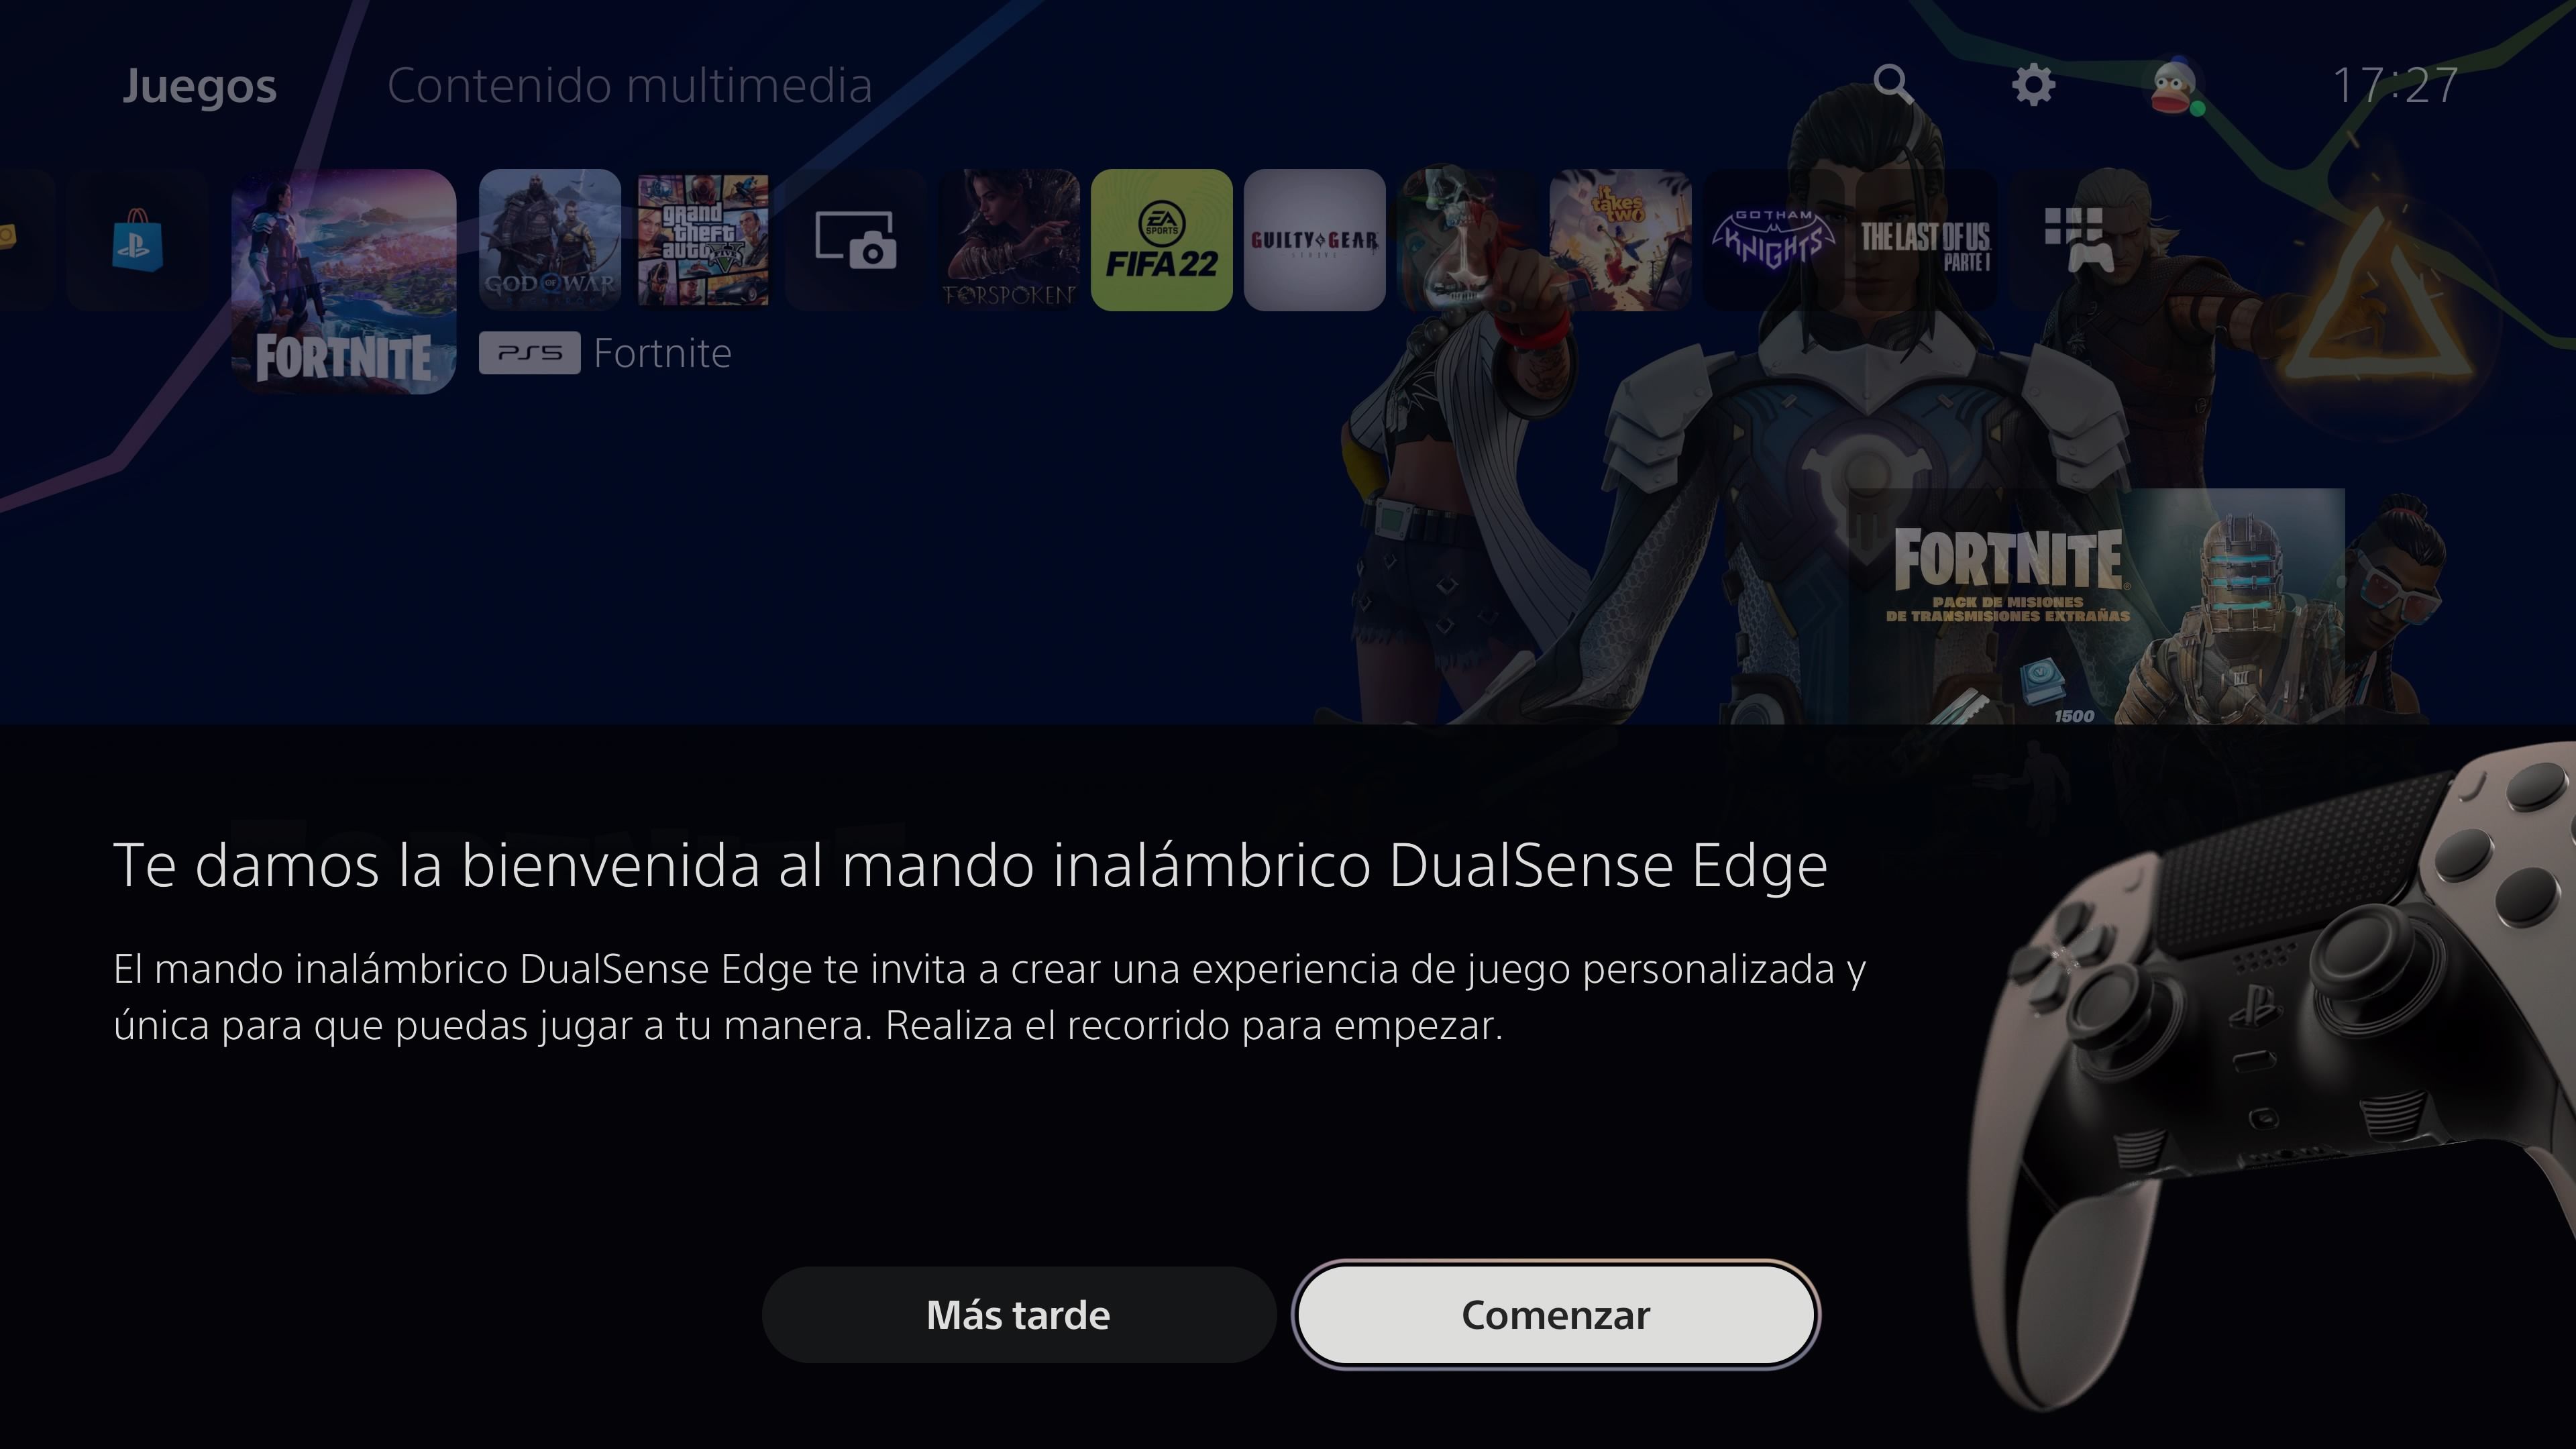 Consola Playstation 5 Digital + Mando + Accesorios + Fortnite